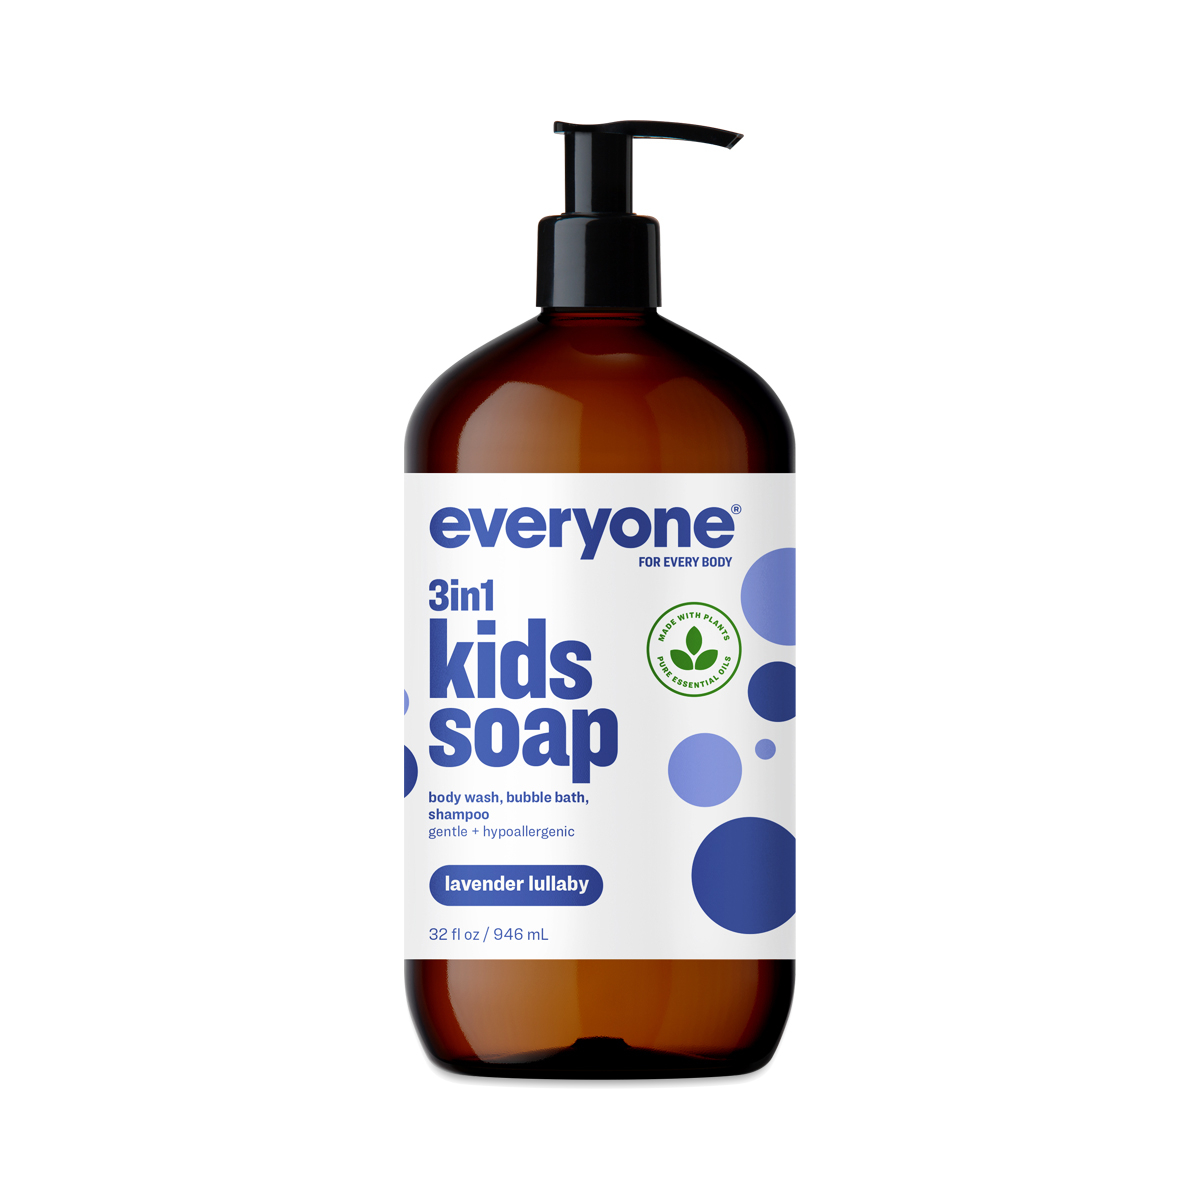 Everyone Soap for Kids, Lavender Lullaby 32 fl oz bottle